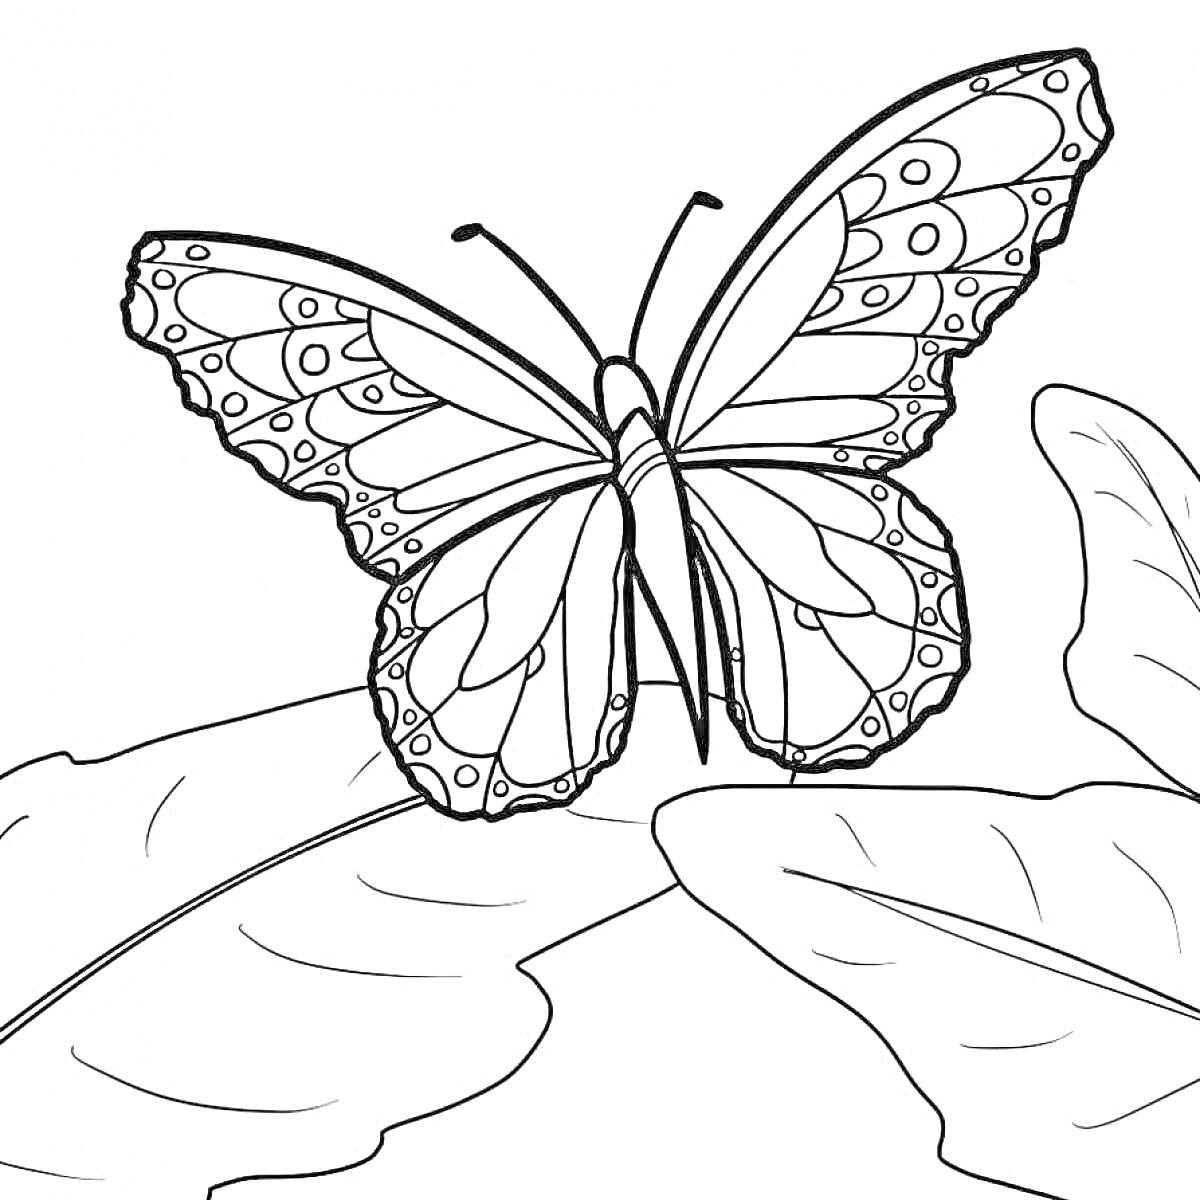 Раскраска Бабочка на листьях